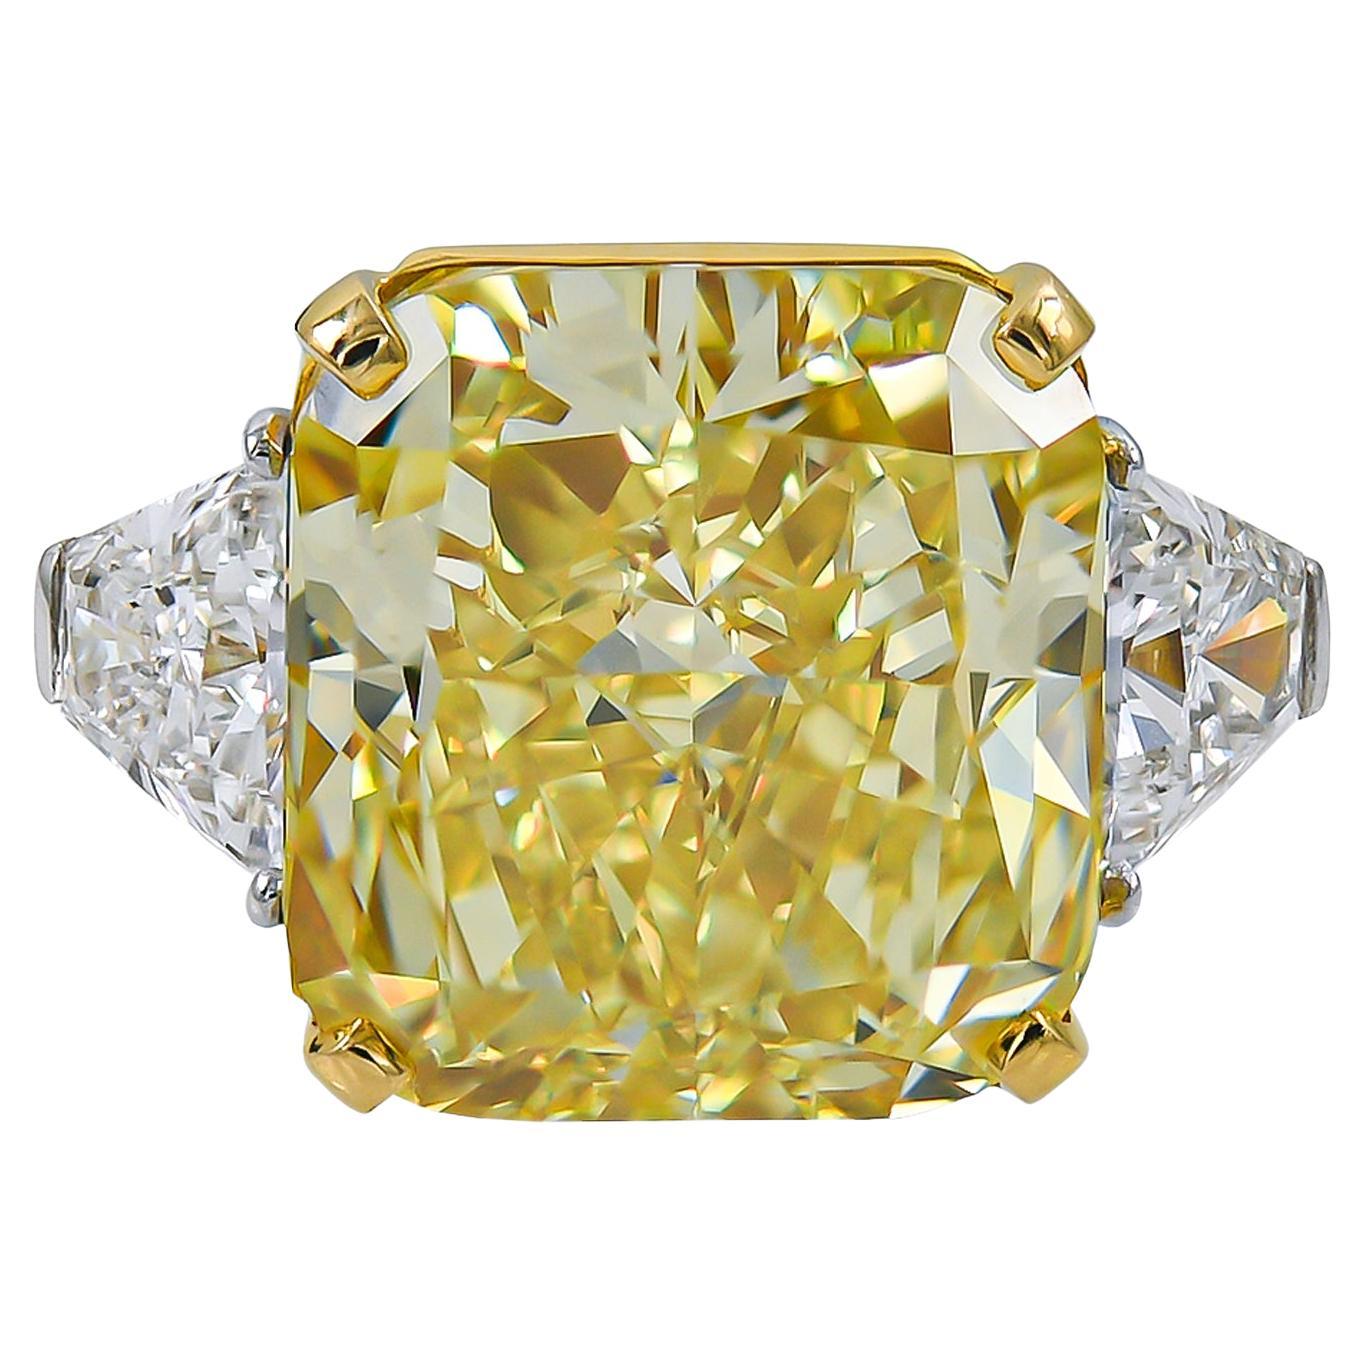 Spectra Fine Jewelry GIA Certified 22.86 Carat Fancy Vivid Yellow Diamond Ring